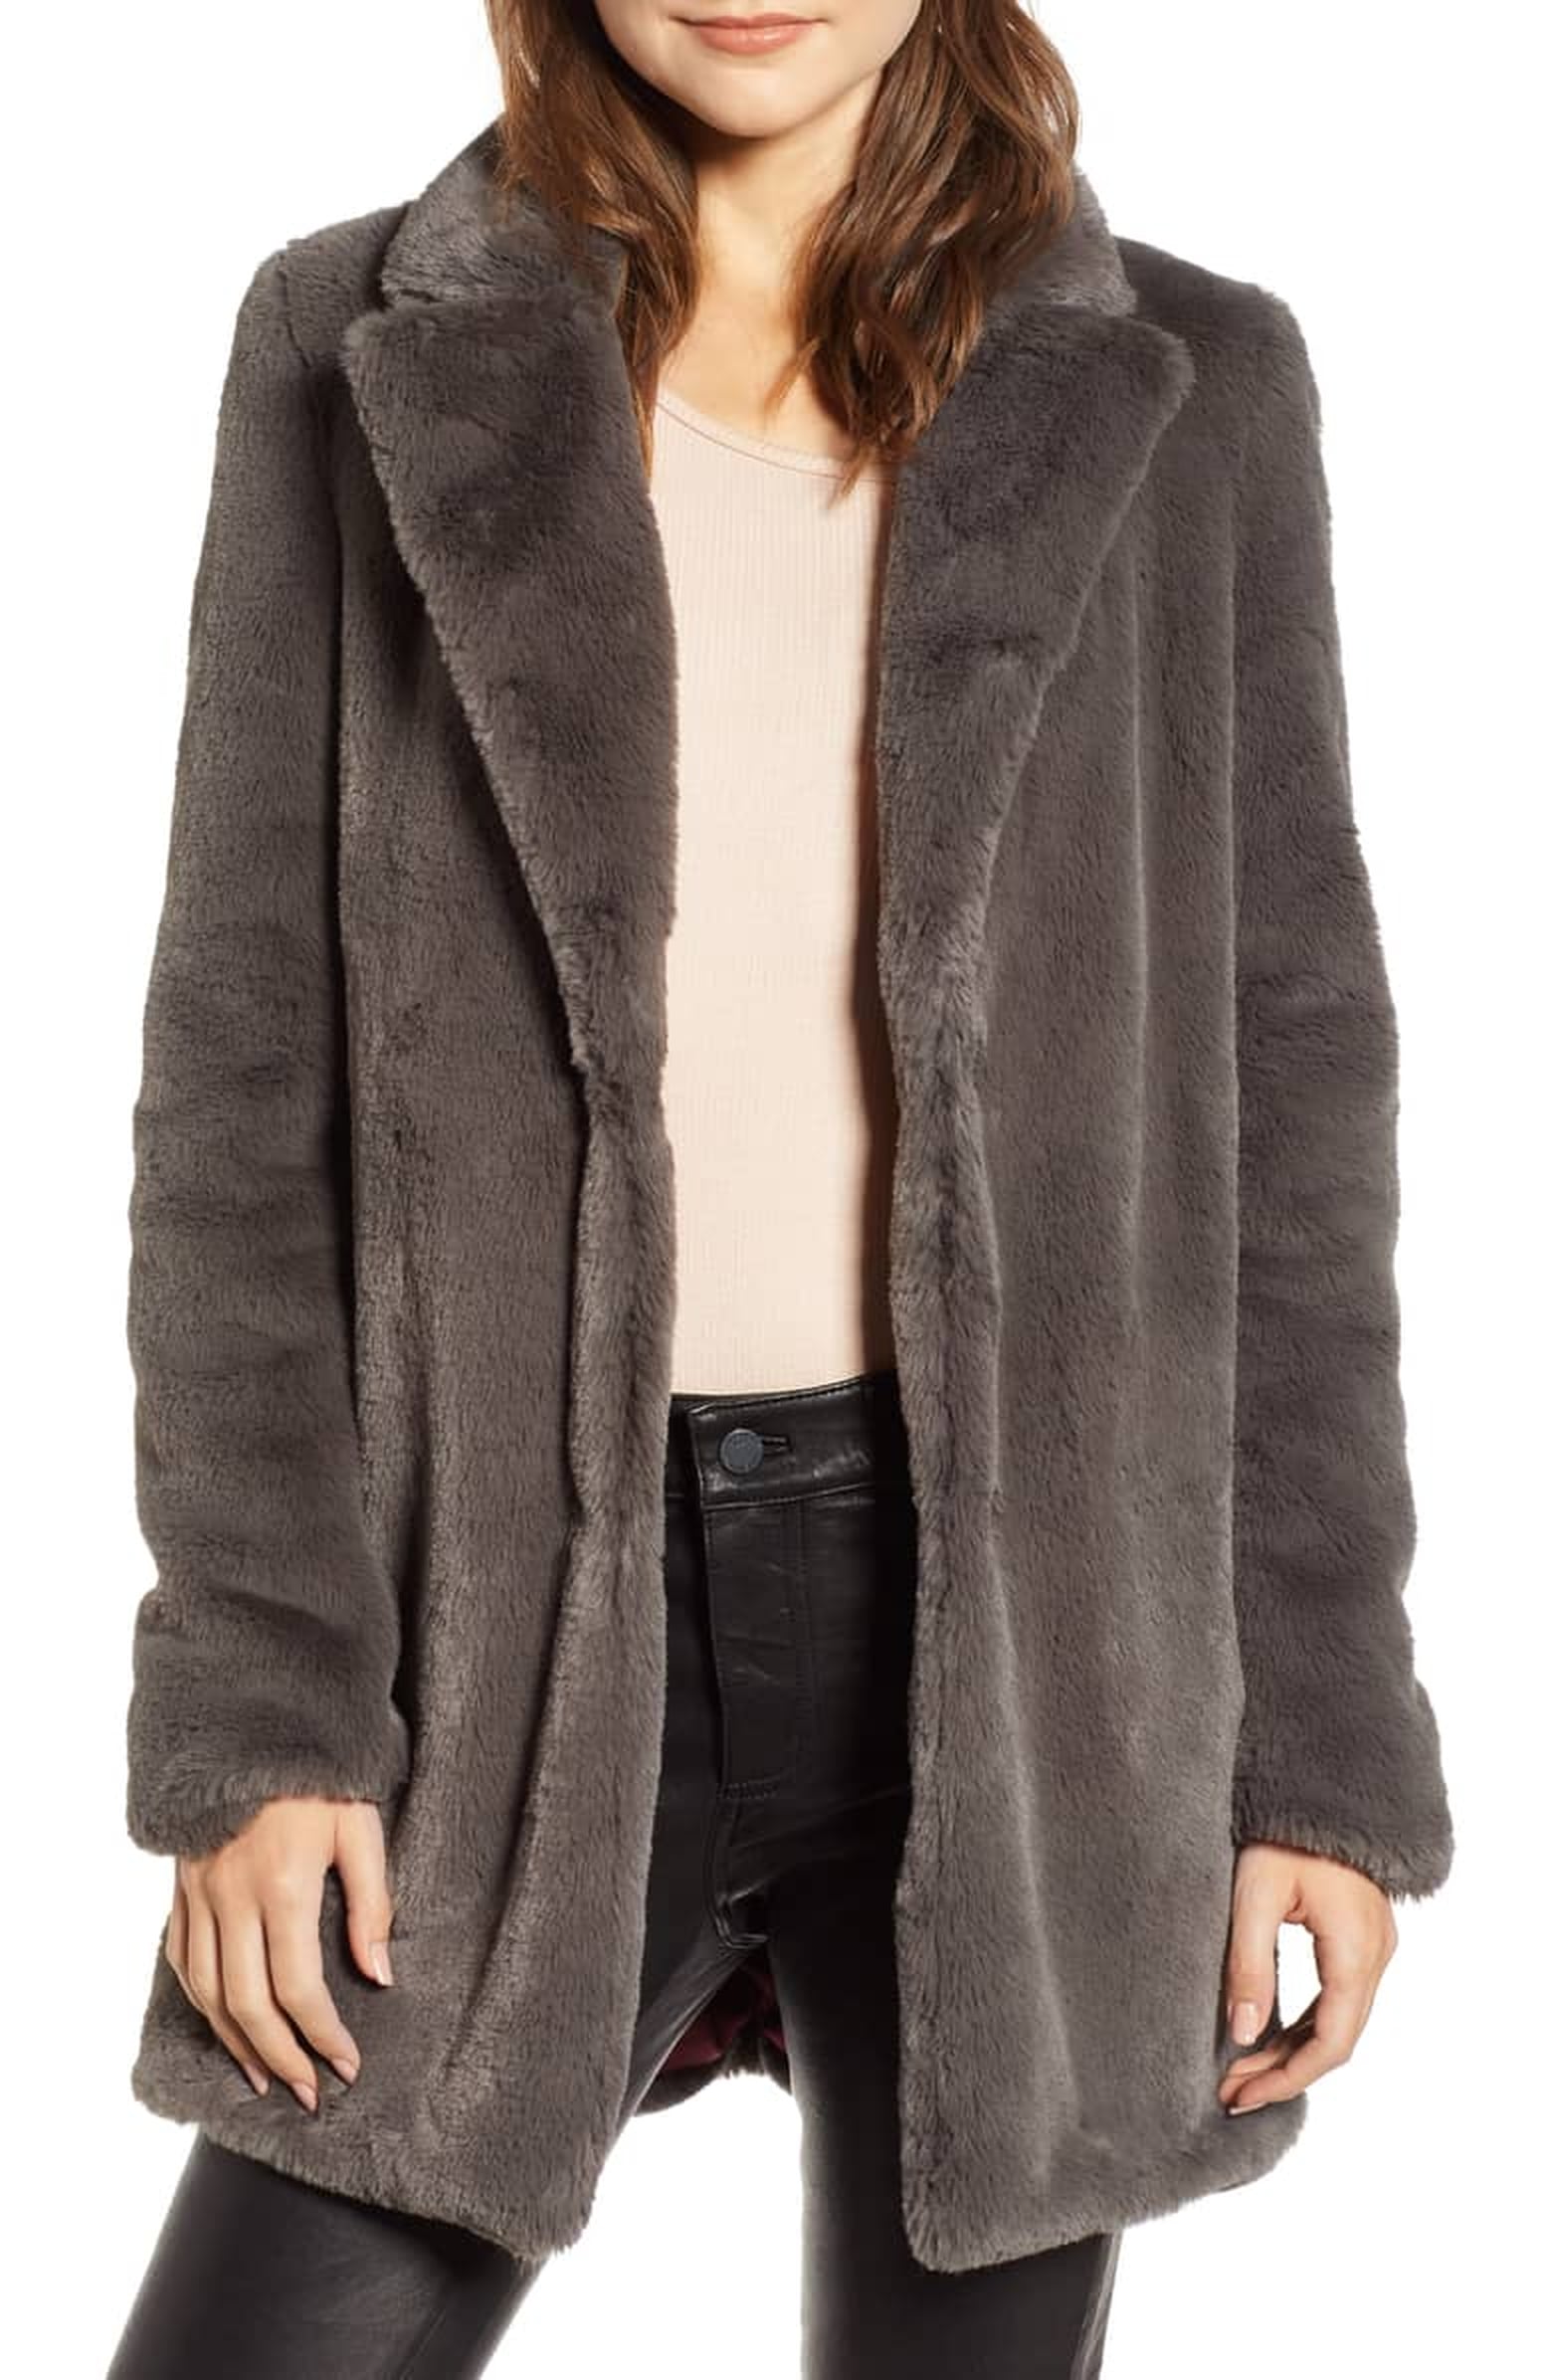 Warmest Coats for Women | POPSUGAR Fashion